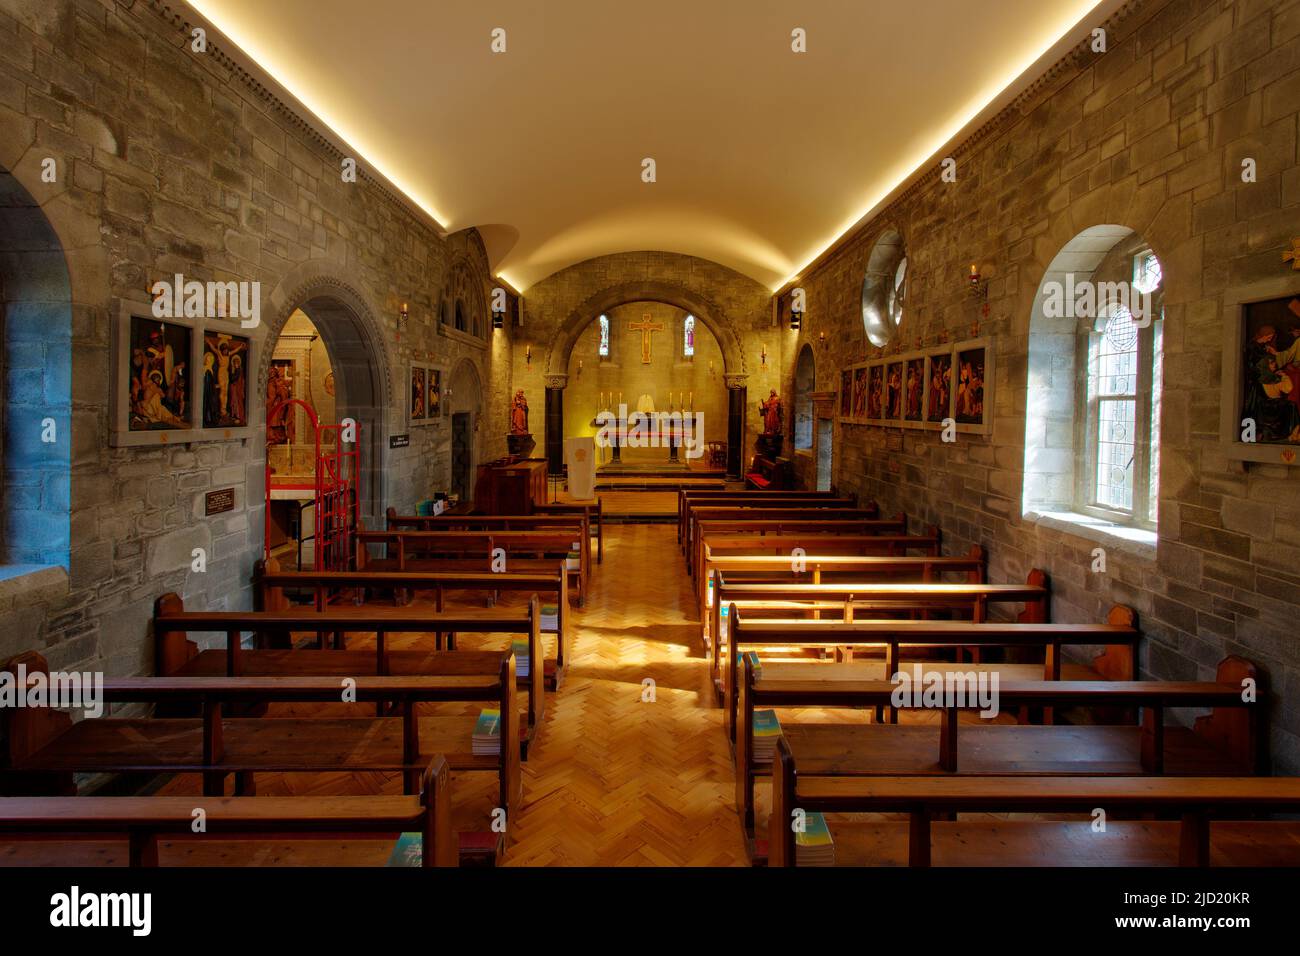 Inside the Catholic Church of St. Cuthbert Mayne in Launceston, Cornwall, UK Stock Photo